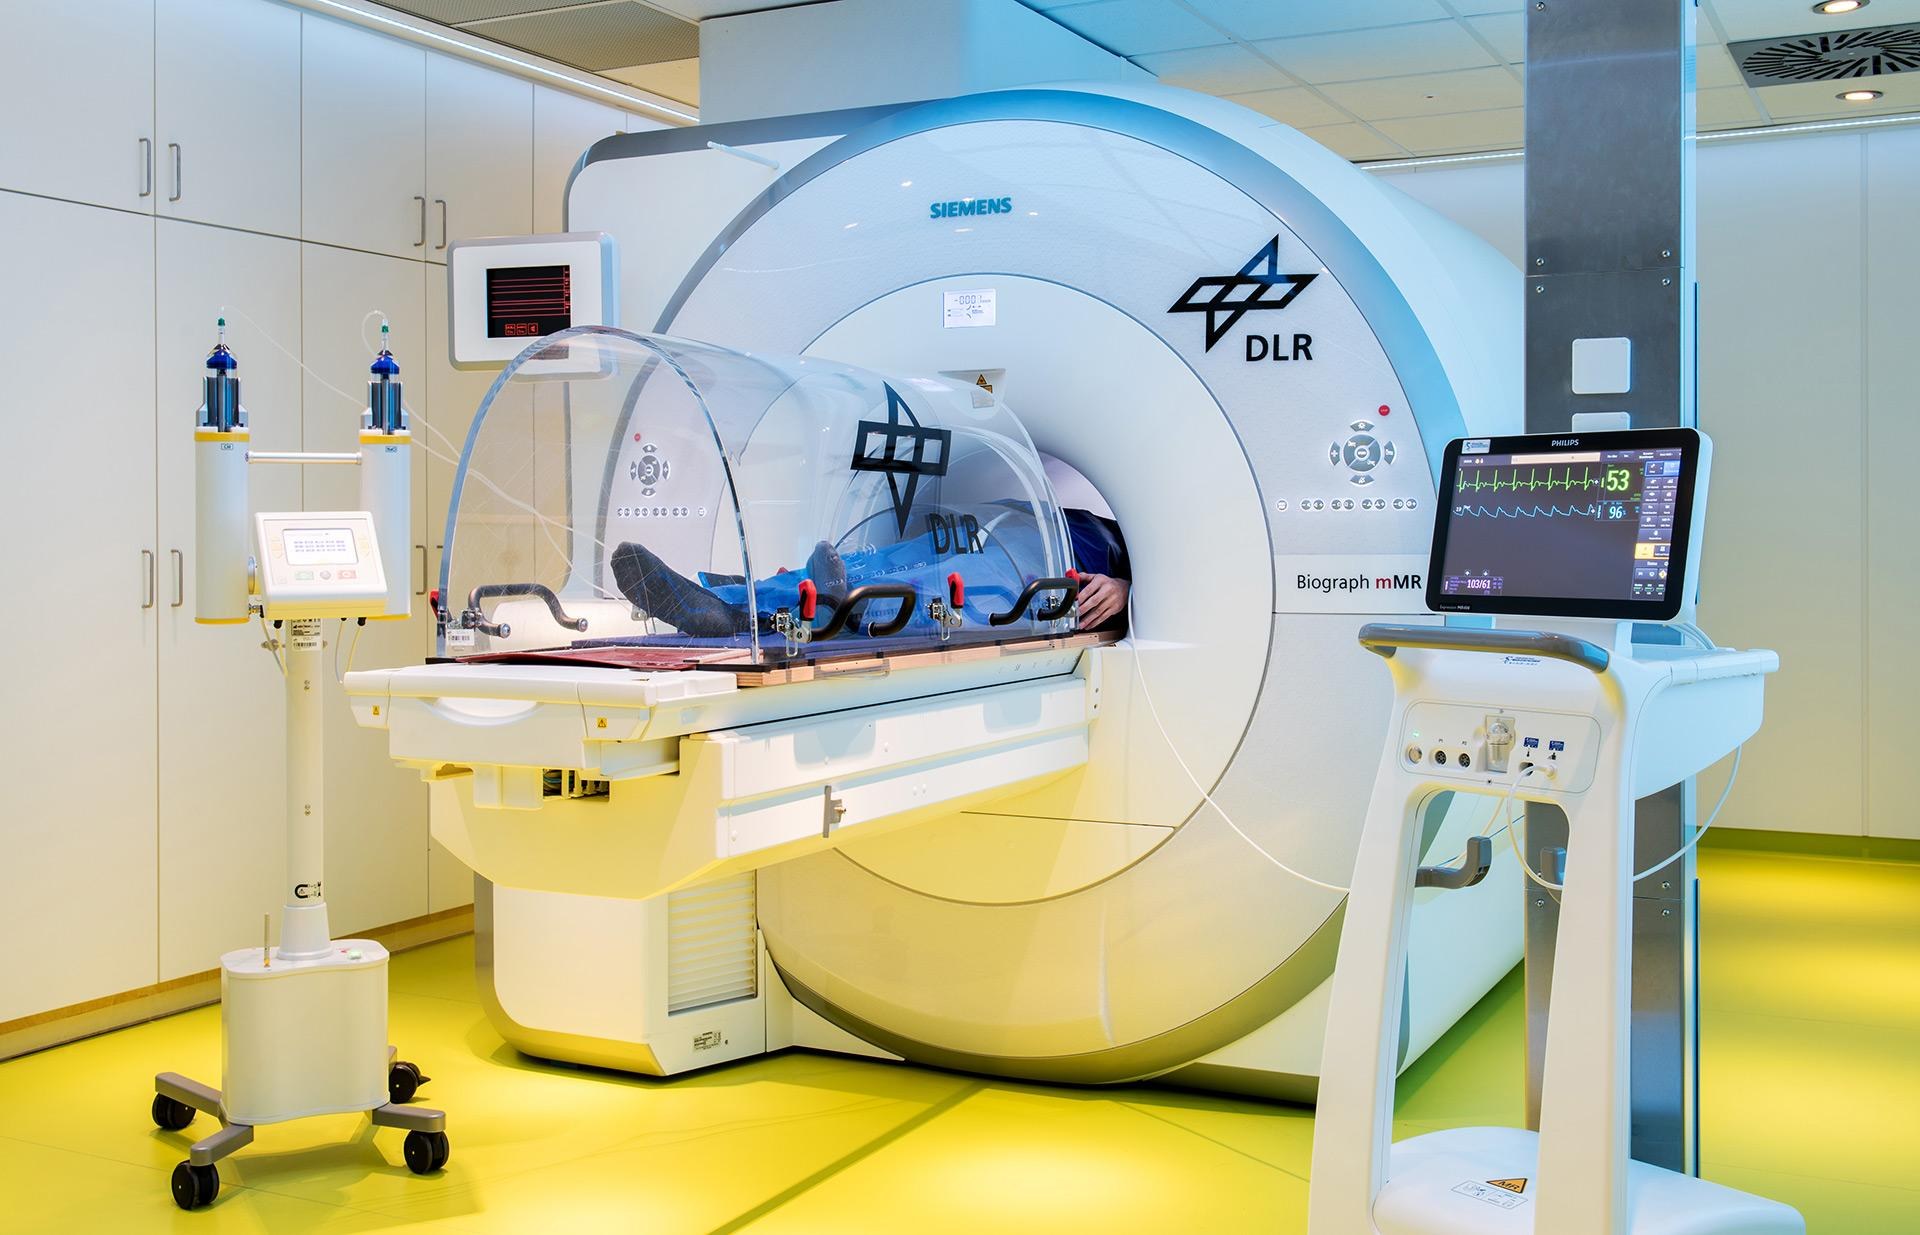 PET-MRI (Positron Emission Tomography/Magnetic Resonance Imaging)